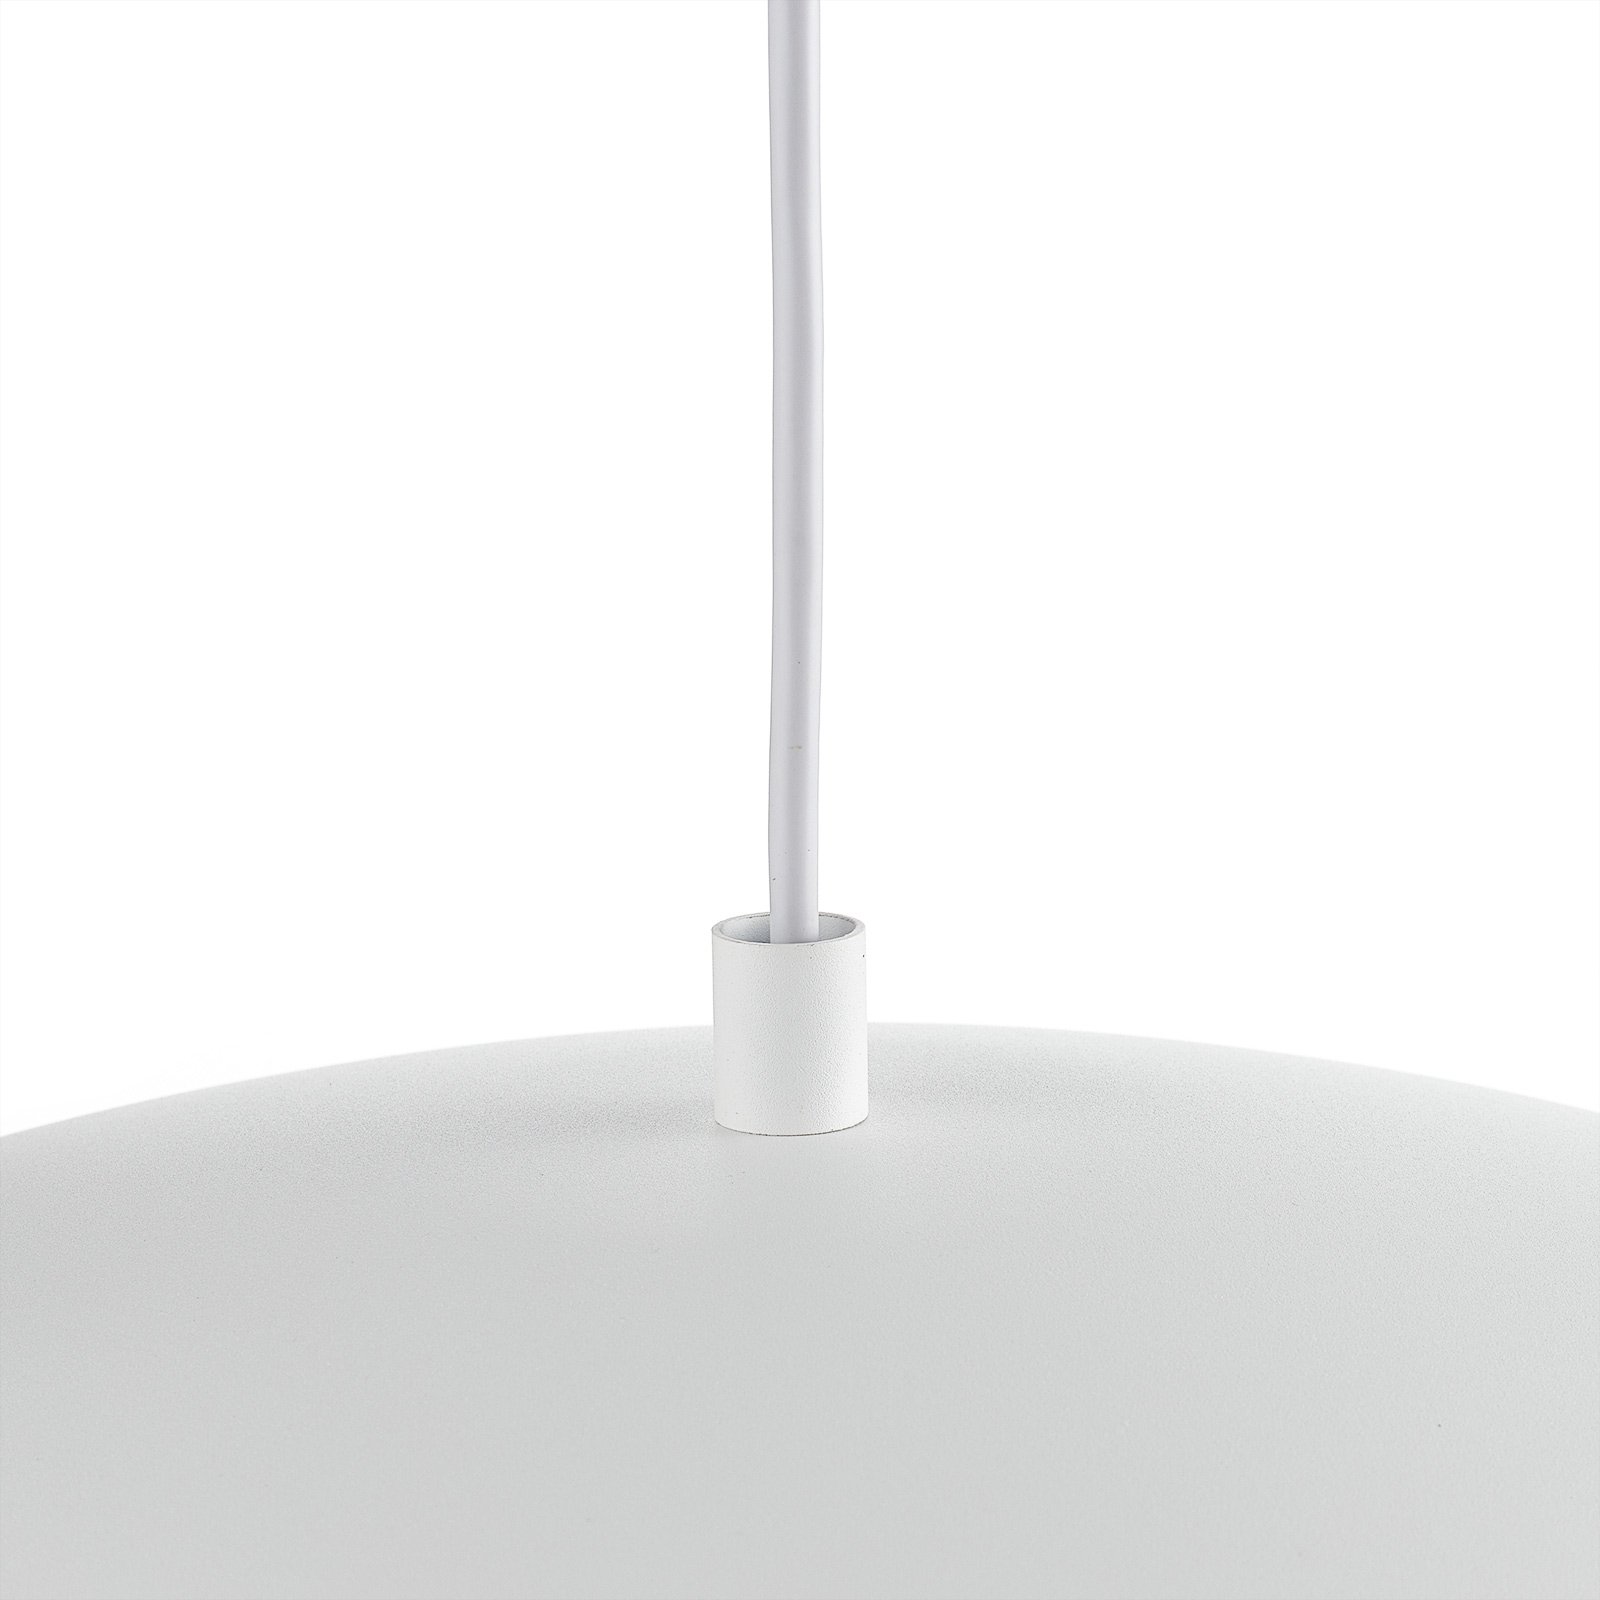 EGLO connect Riodeva-C LED sospensione bianco